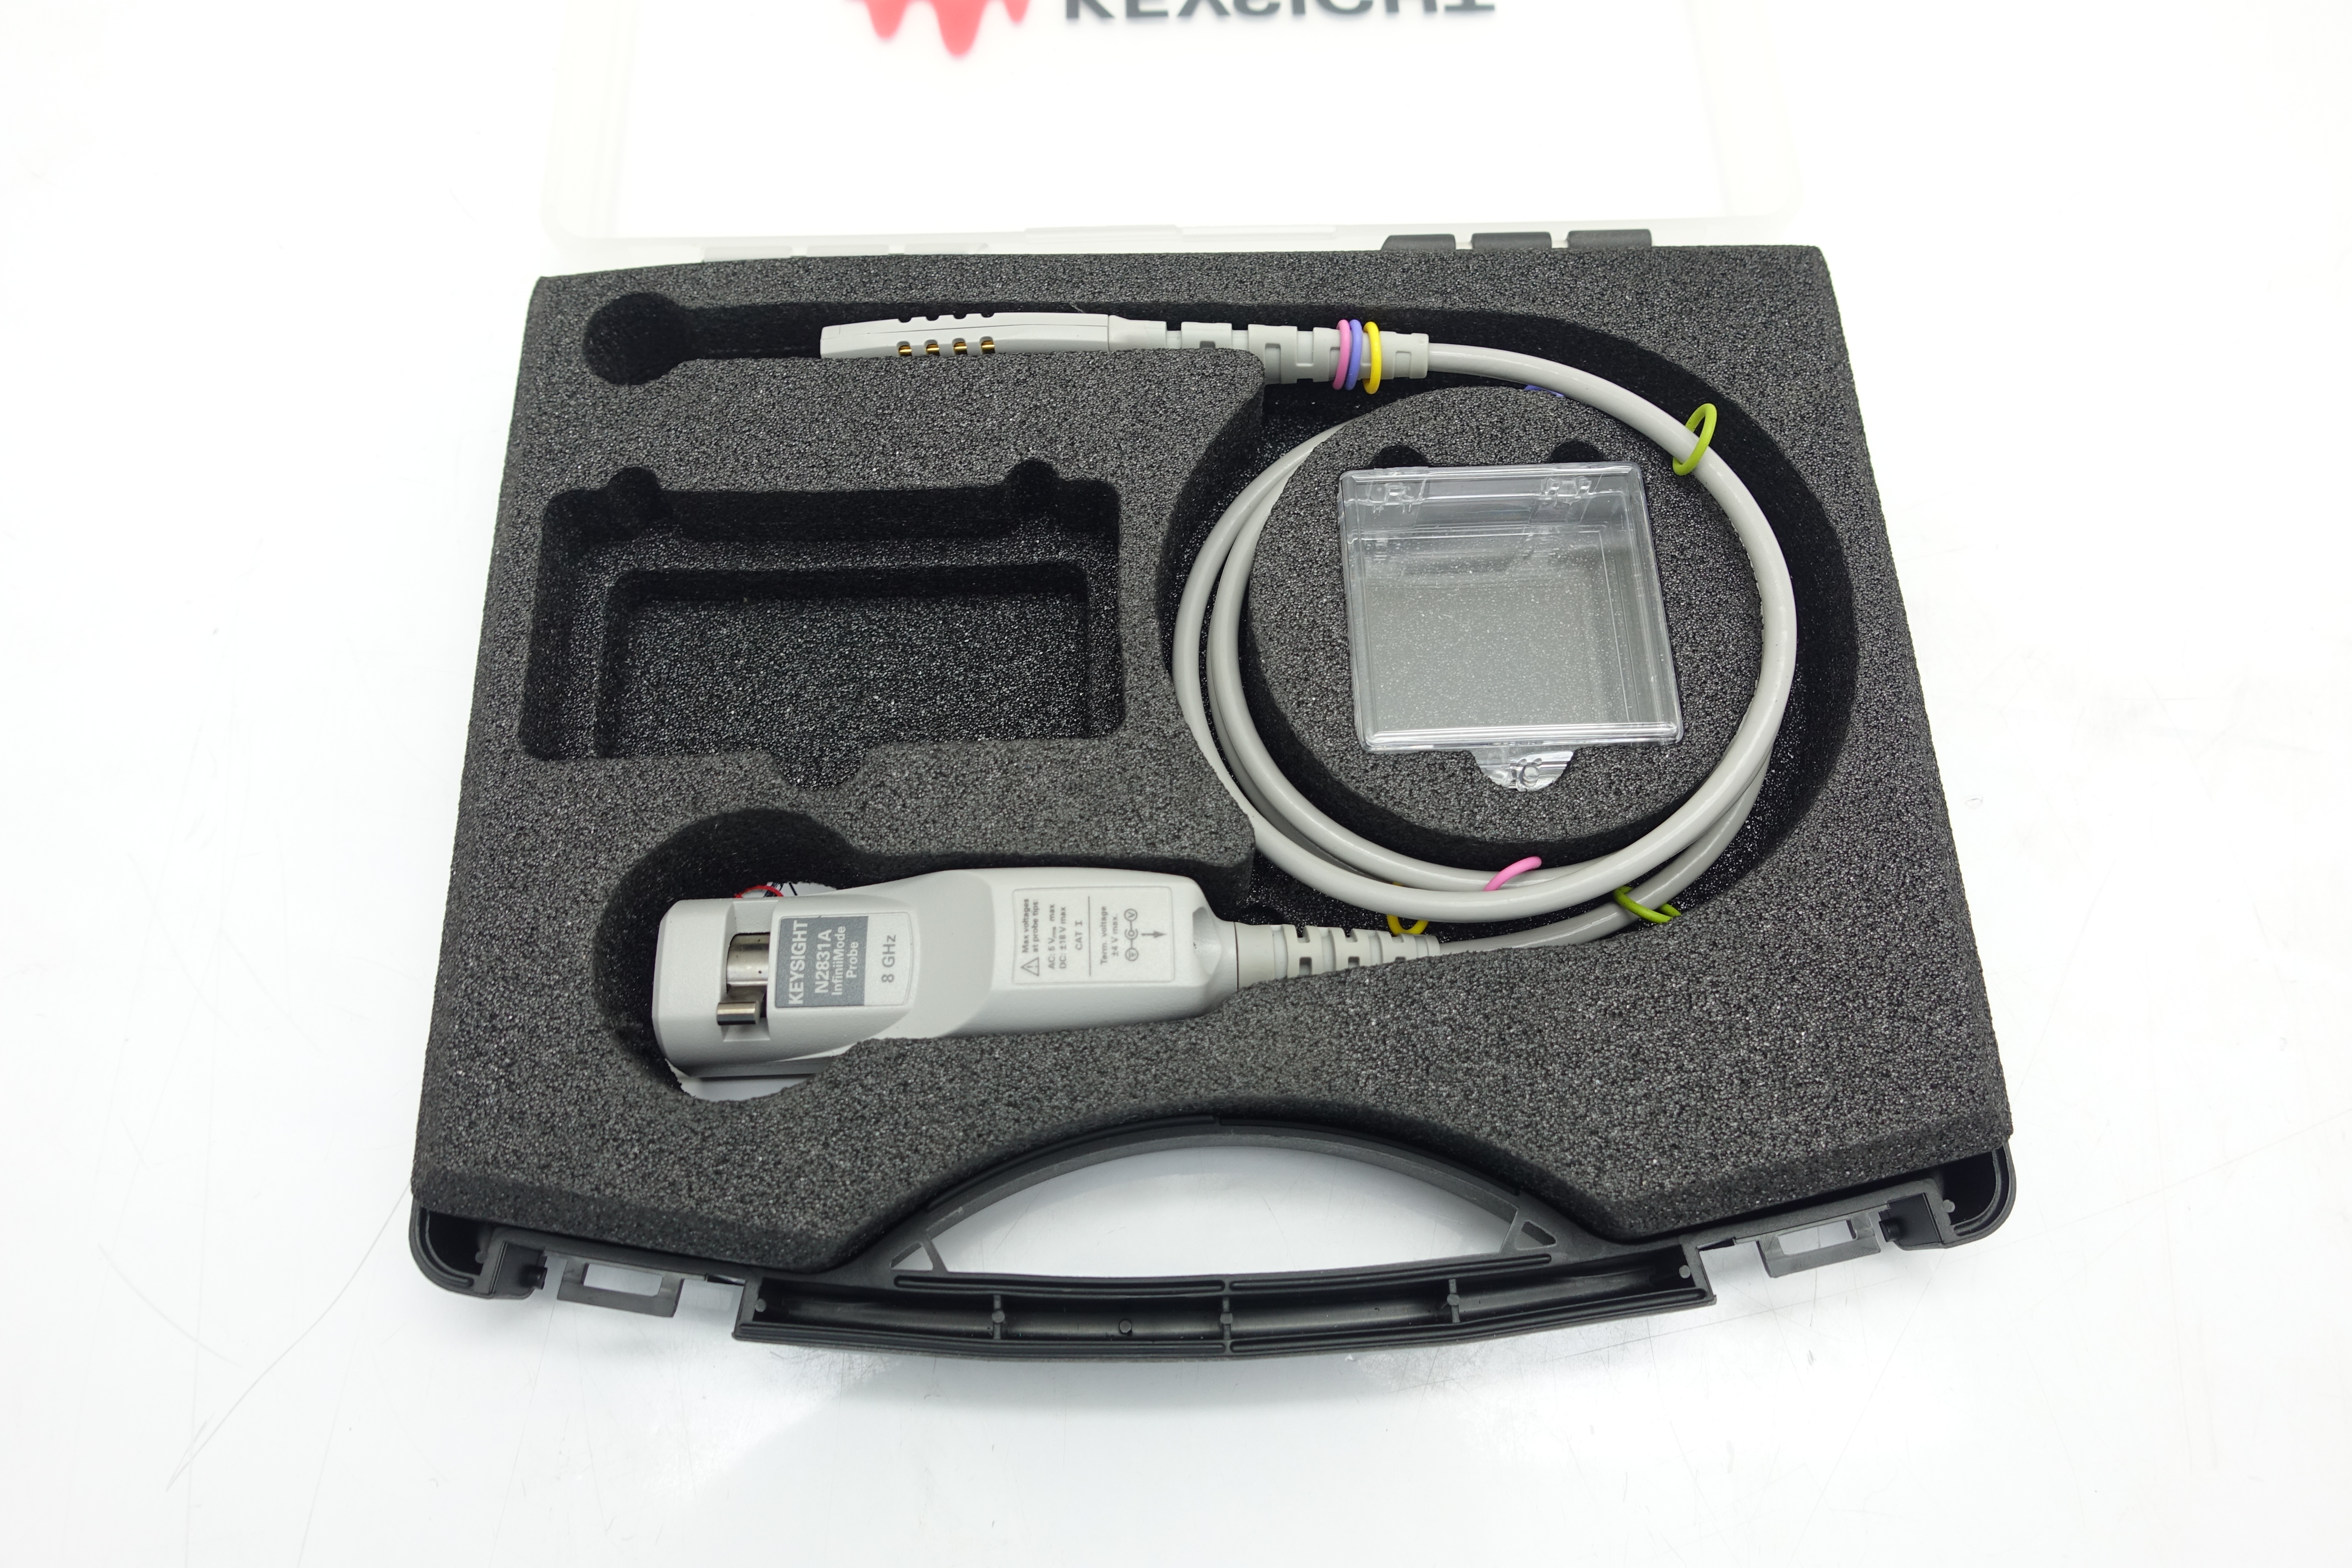 Keysight N2831A InfiniiMax III+ Series Probe Amplifier / 8 GHz